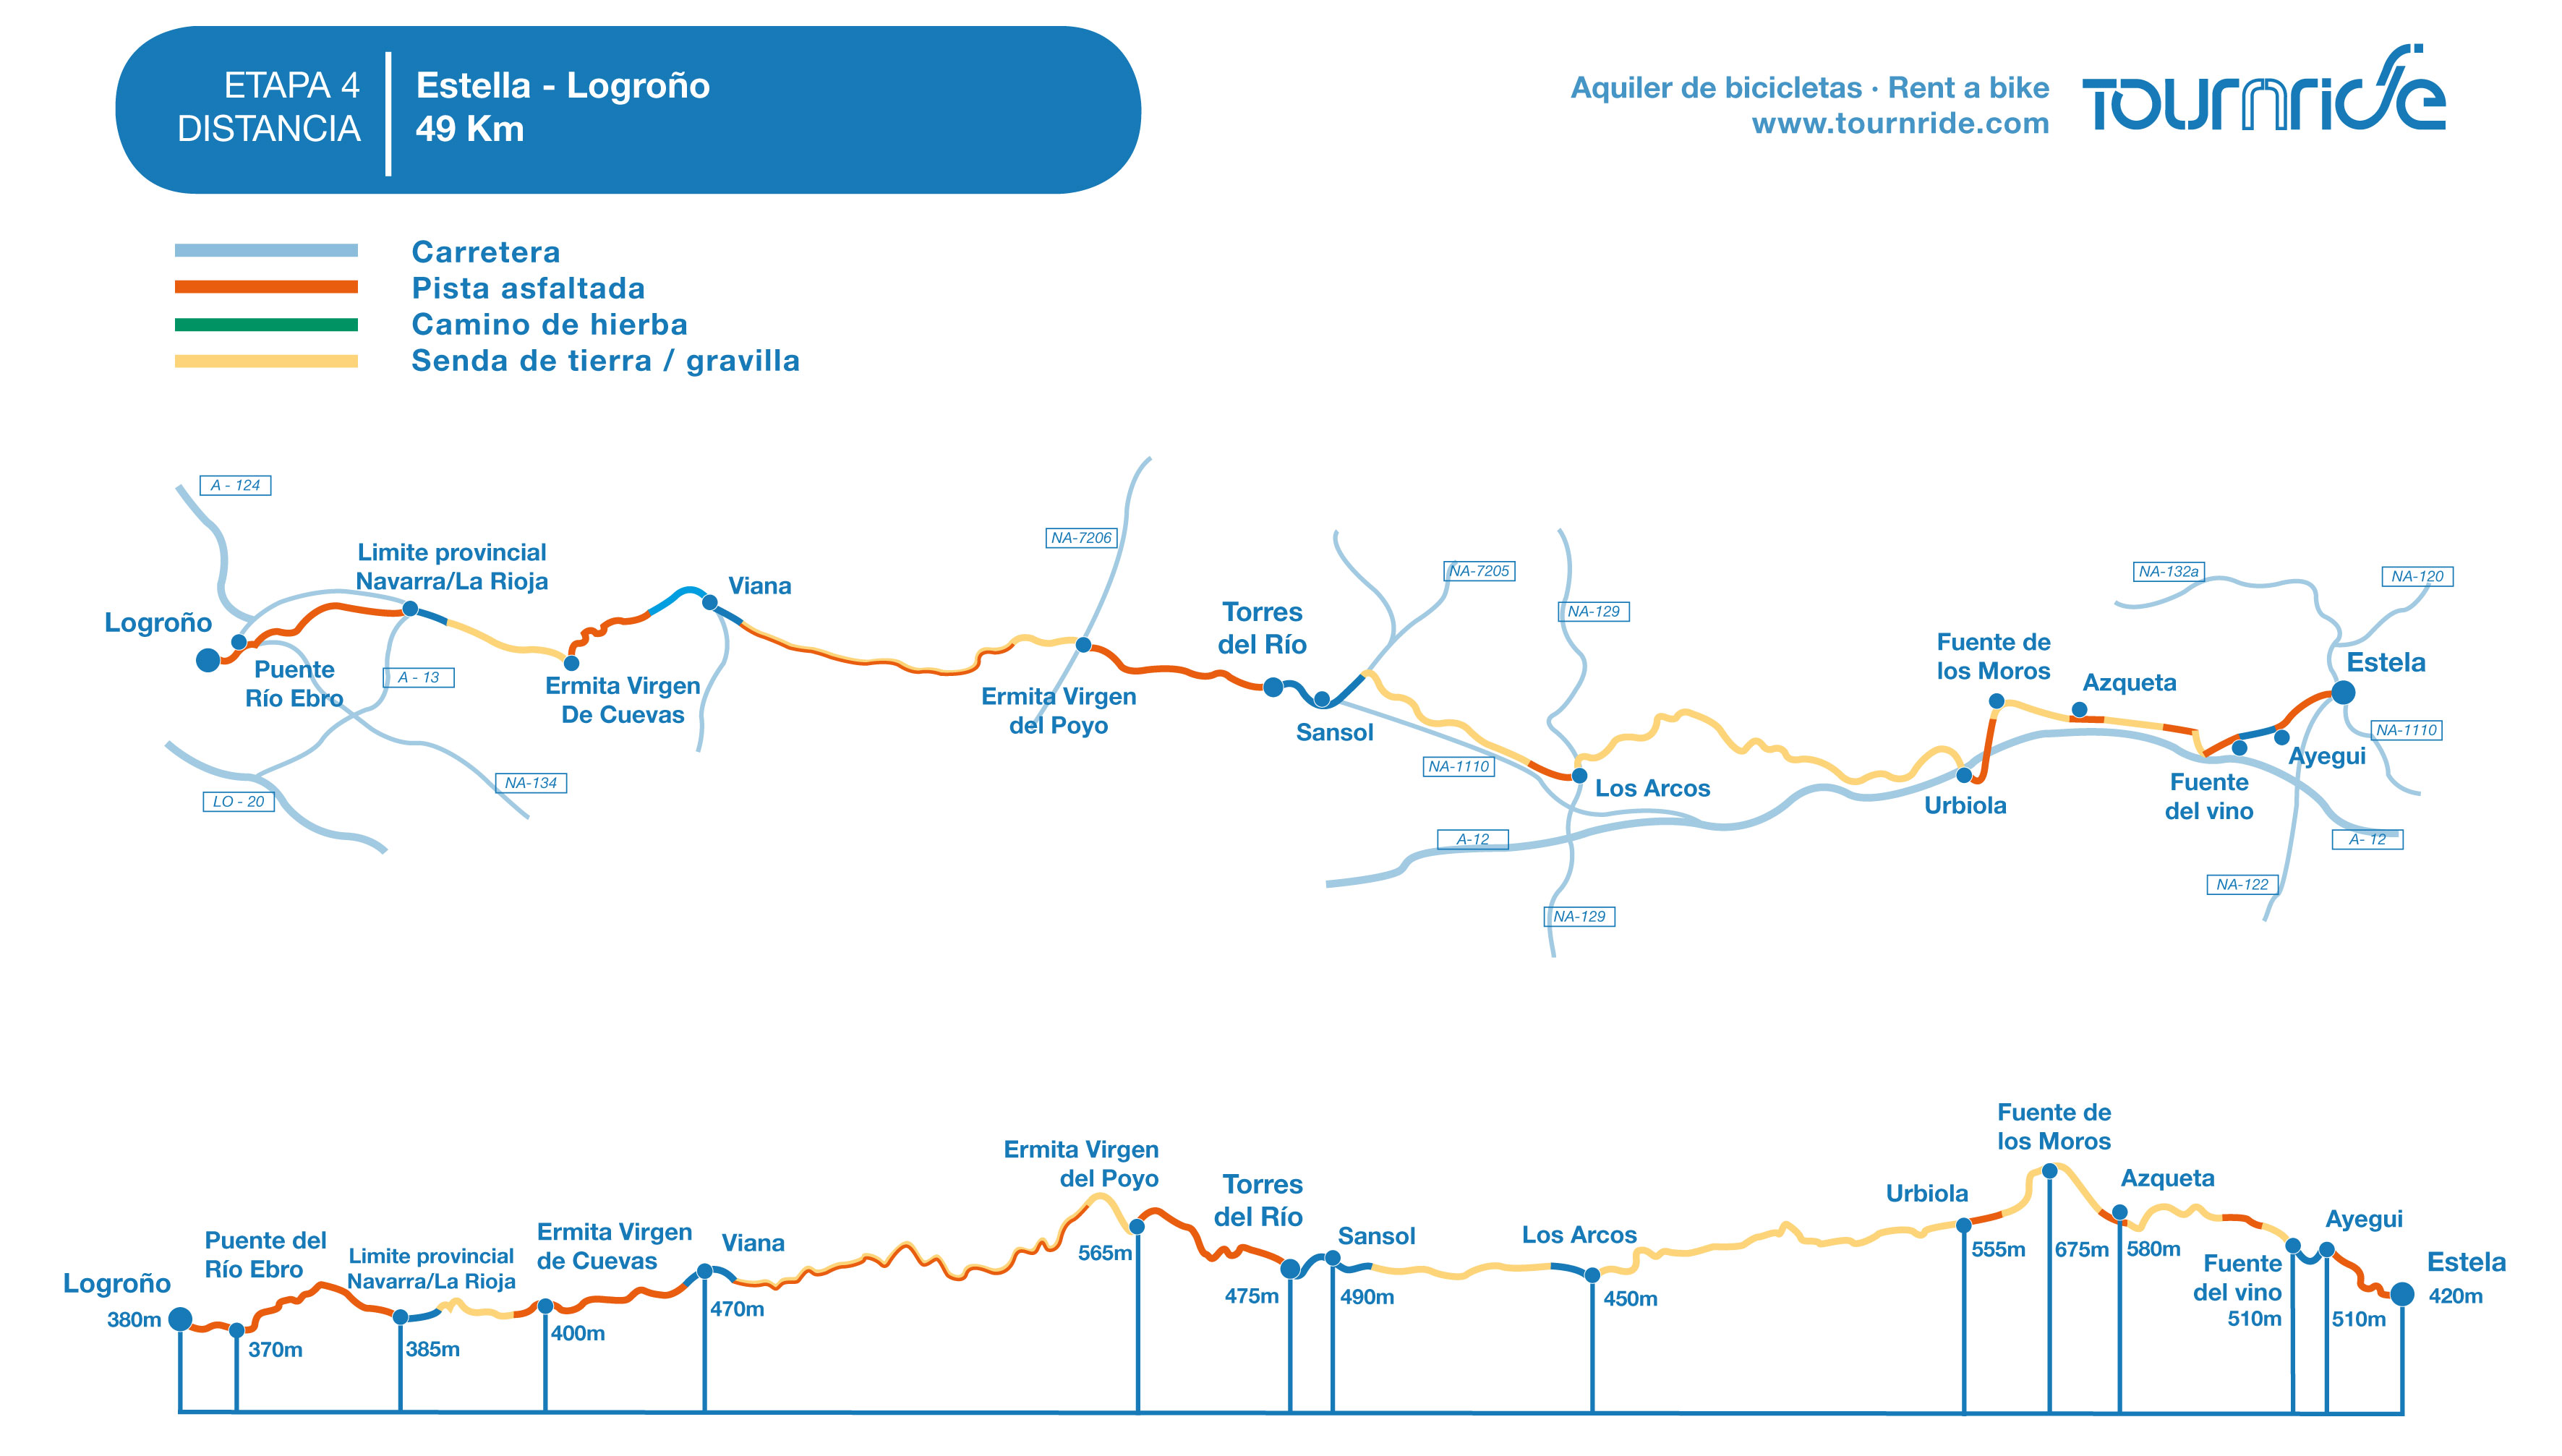 Saint James Way by bike stage four: from Estella to Logroño